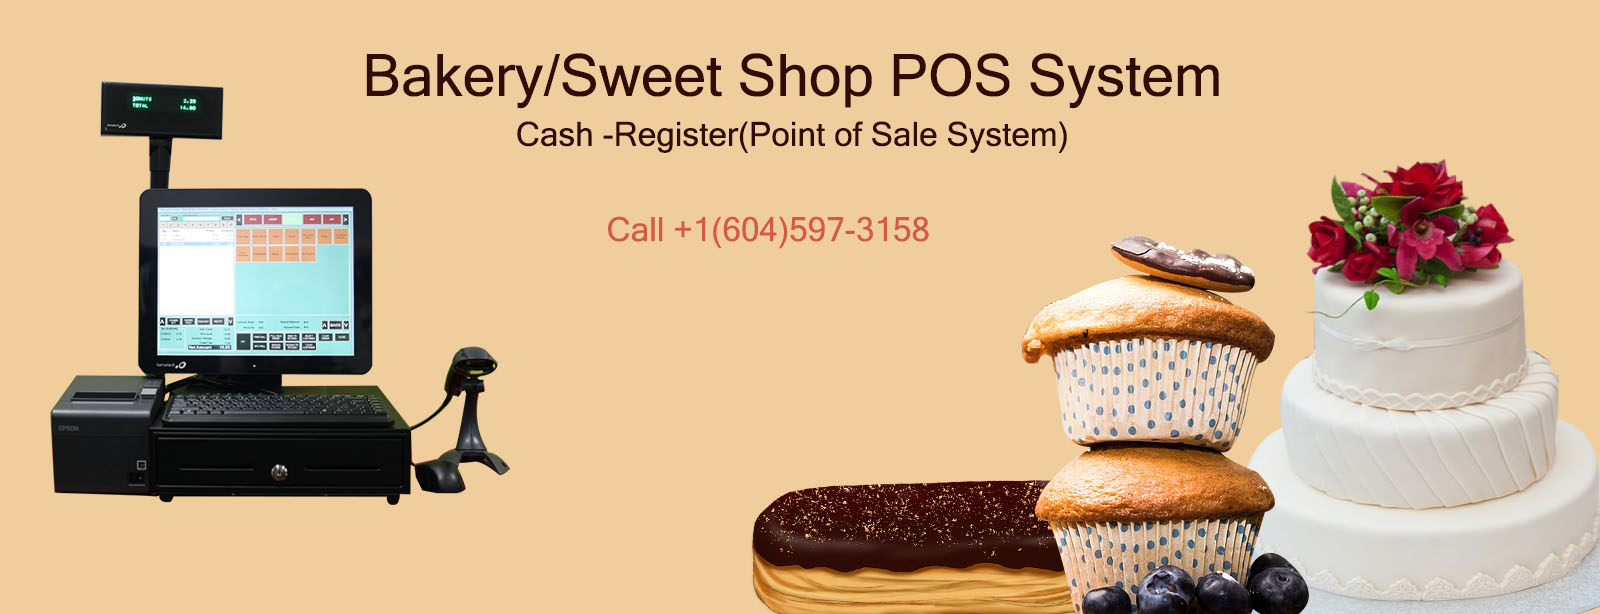 Bakery/Sweet Shop POS System, Cash Register, Point of Sale System